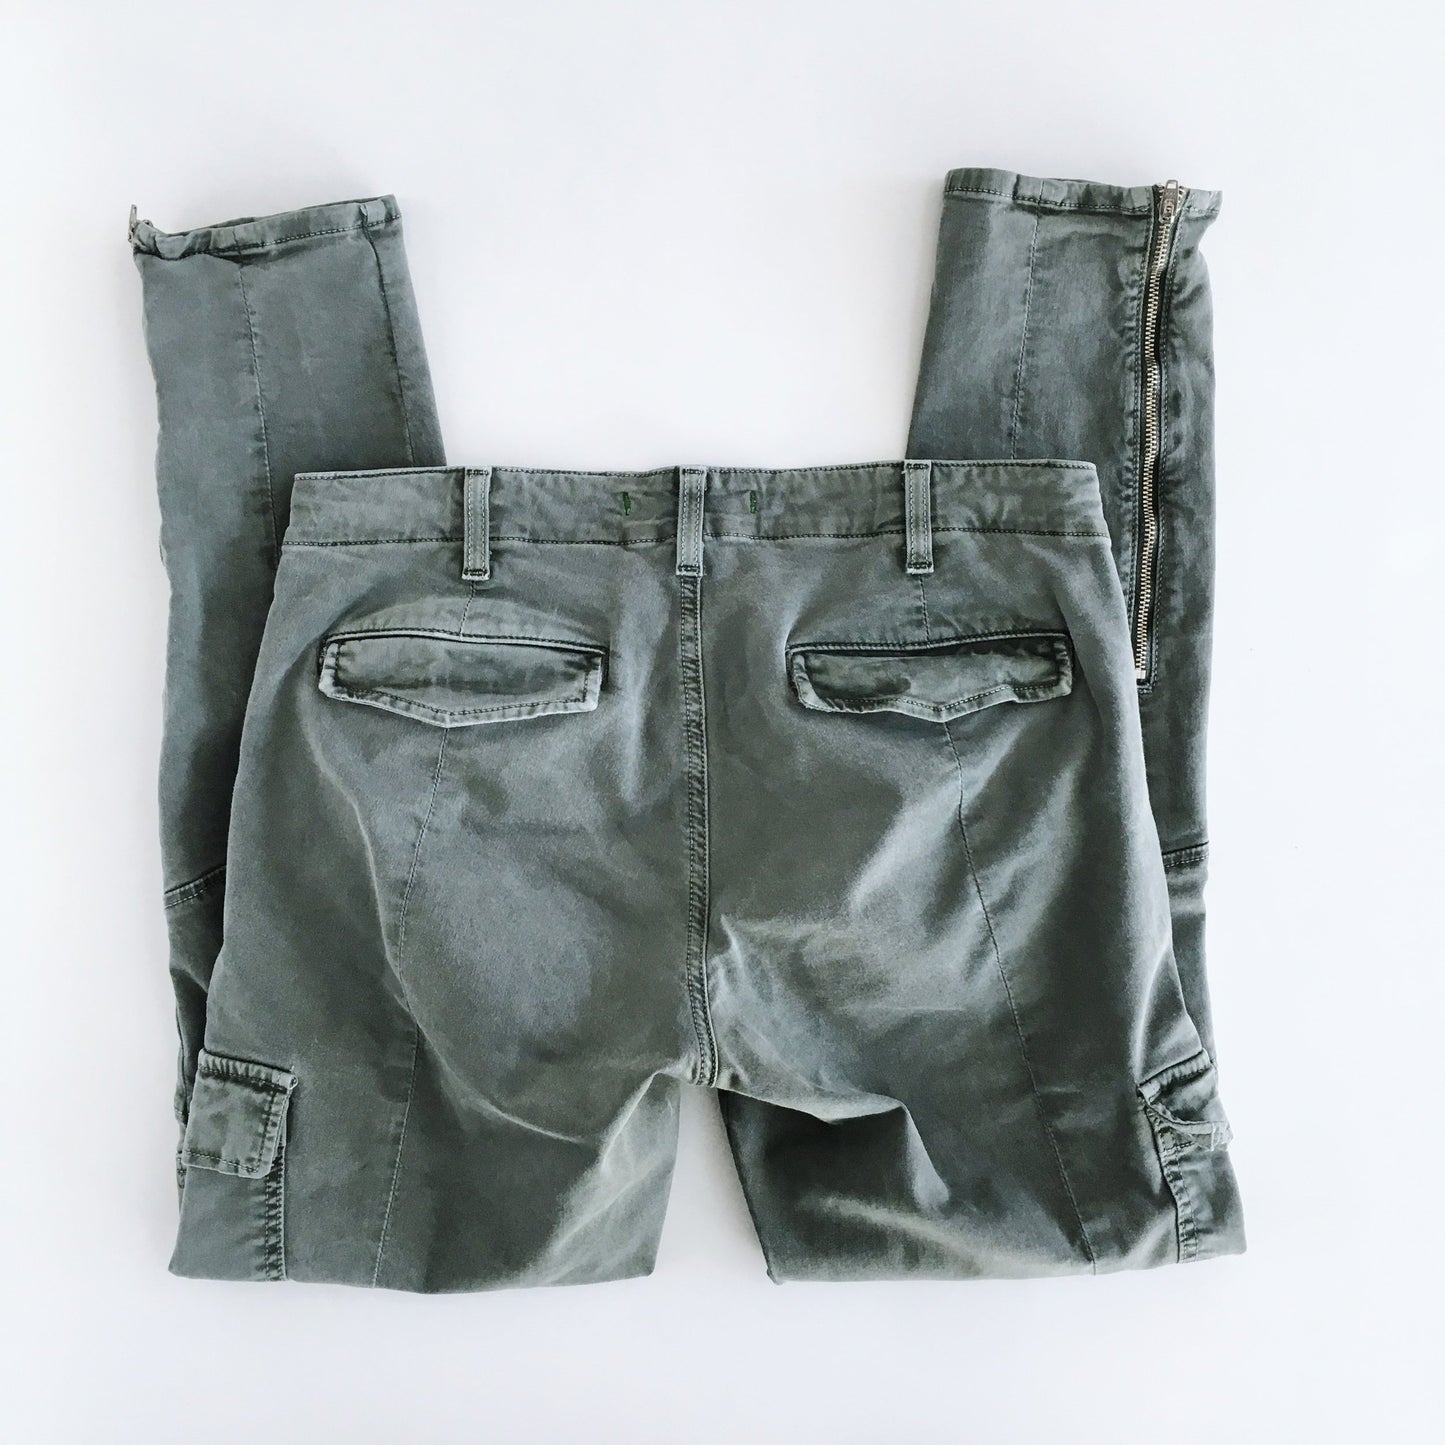 J Brand Houlihan Cargo Skinny Pants - 29x29